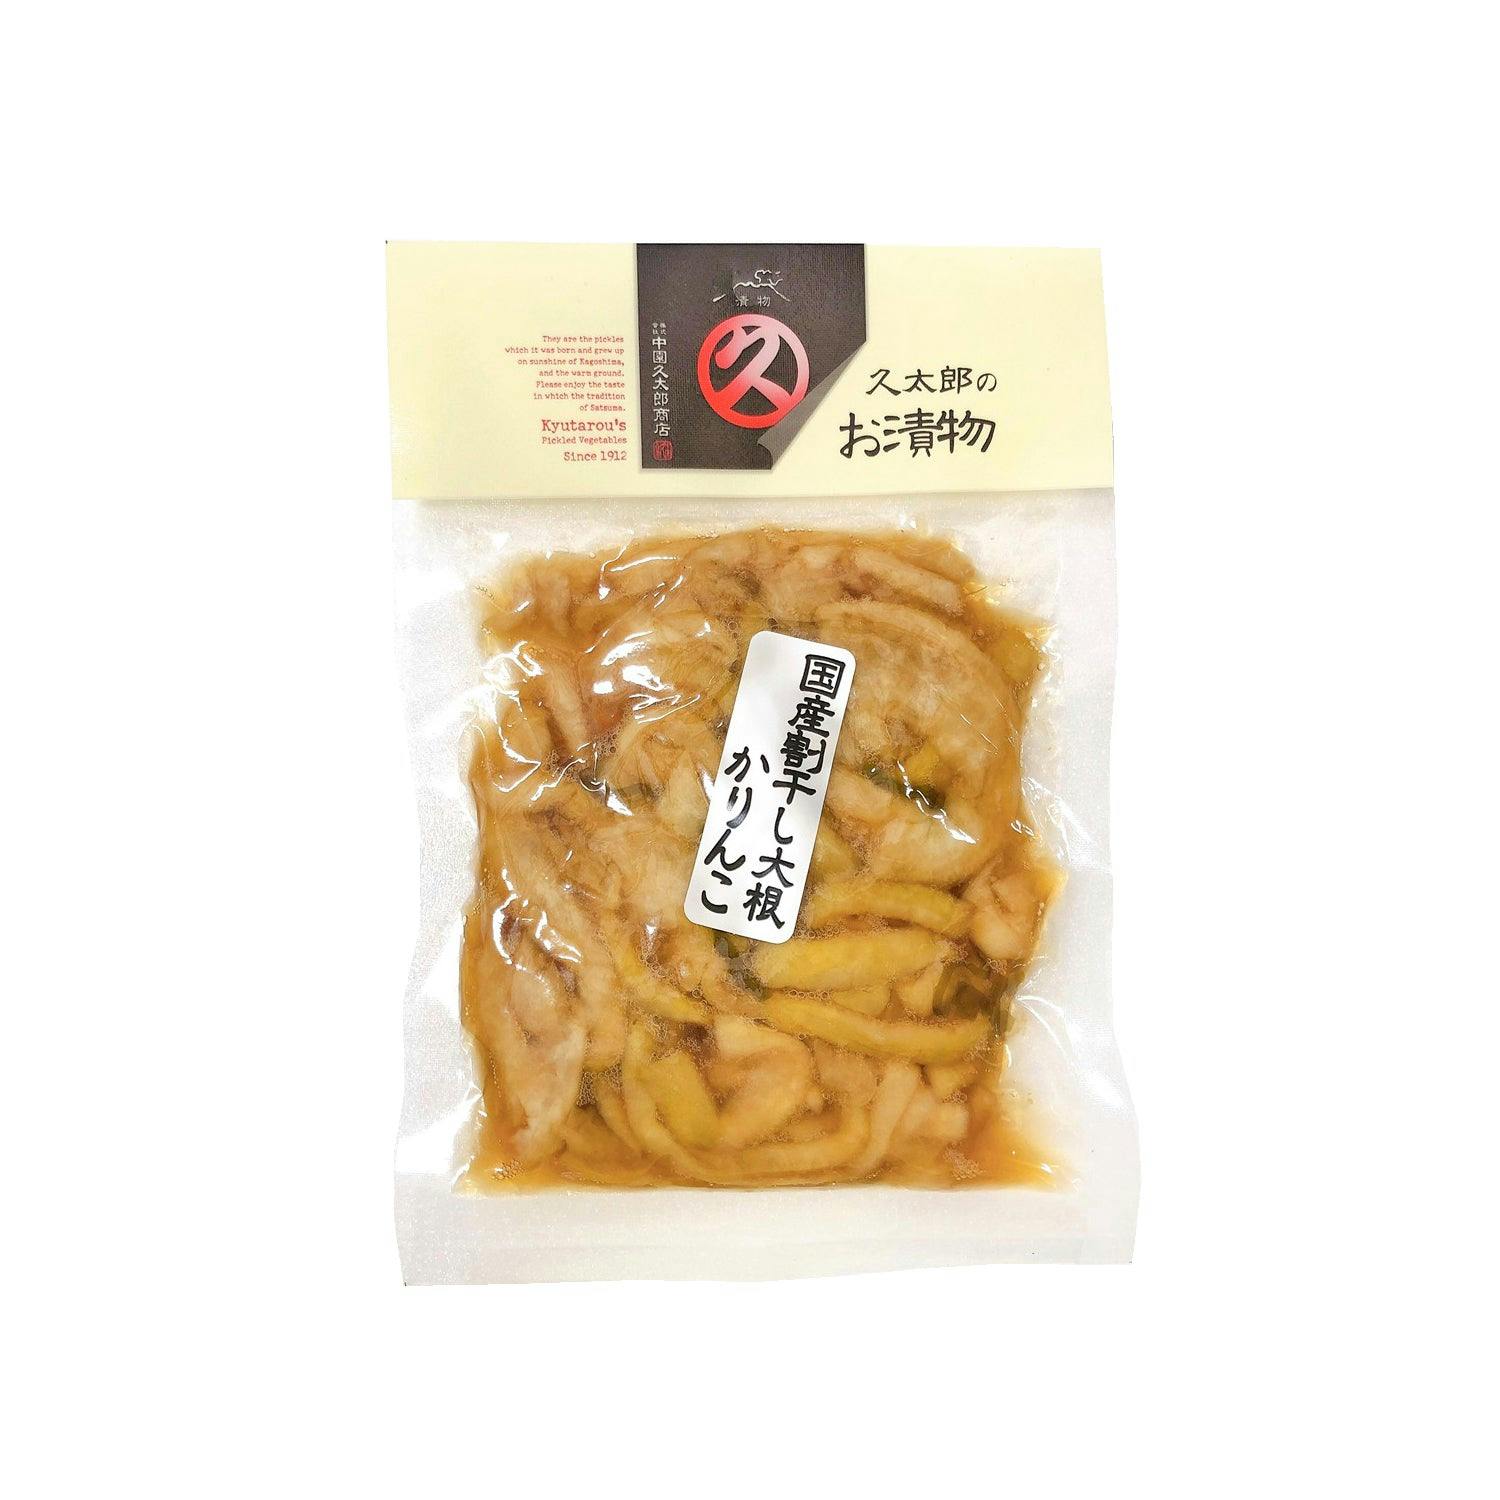 Kyrutaro 中园久太郎 Wariboshi Daikon Soy Sauce Seasoned Dried Radish 100g 酱油腌 萝卜干